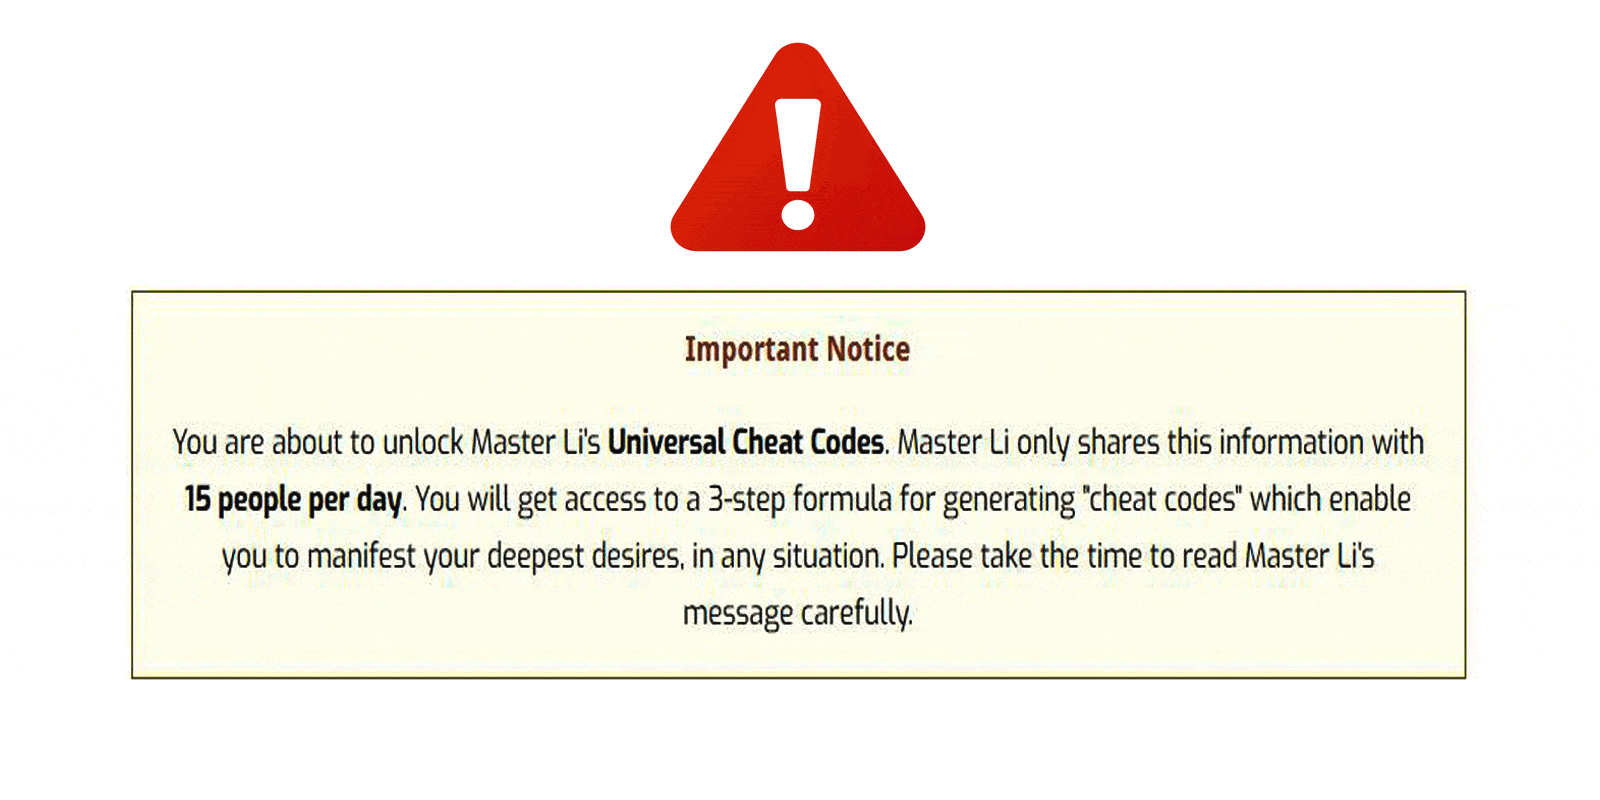 Master Li's Universal Cheat Codes Program